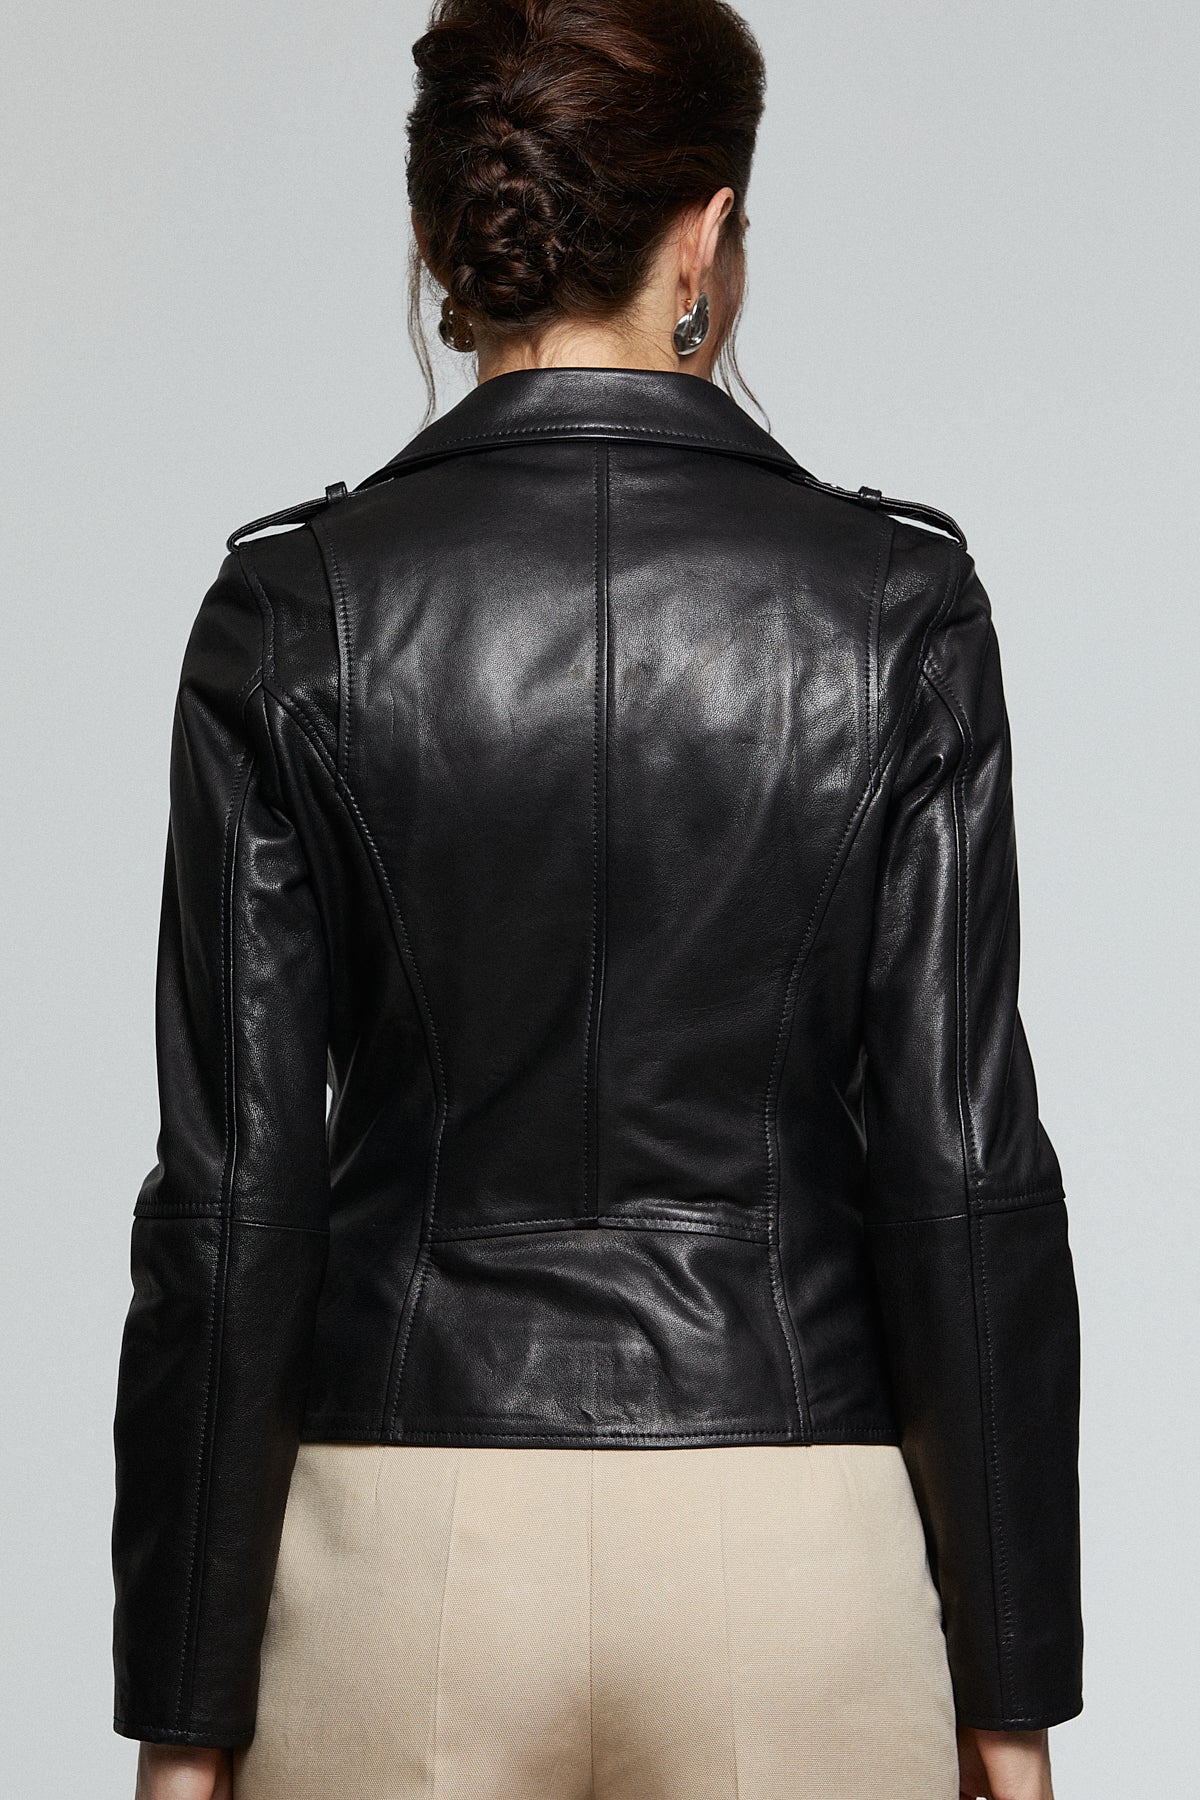 Egoist Woman Black Leather Jacket